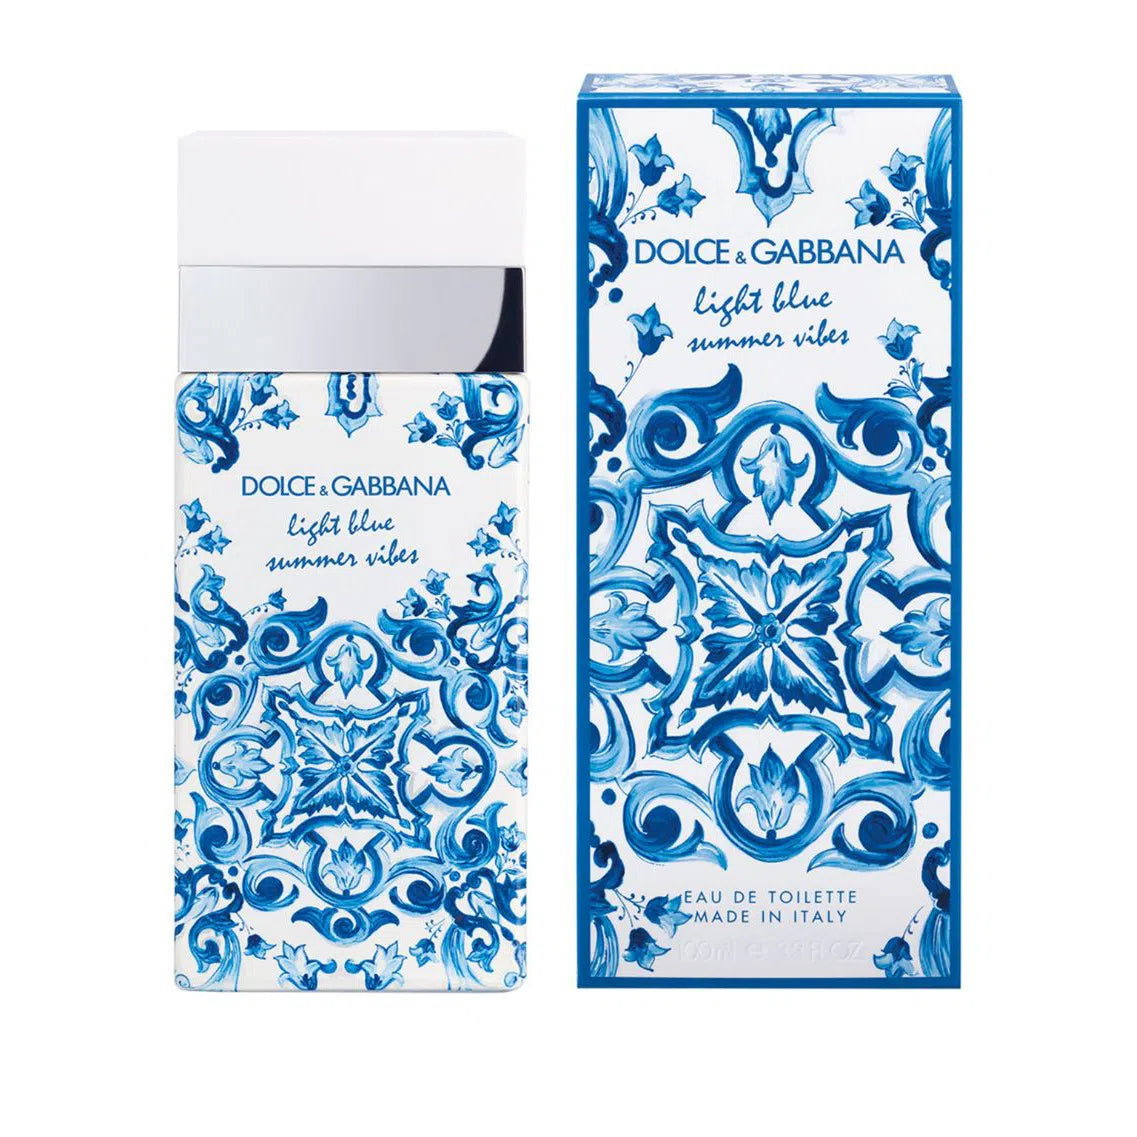 Perfume Dolce & Gabbana Light Blue Summer Vibes EDT (W) / 100 ml - 8057971183500- Prive Perfumes Honduras